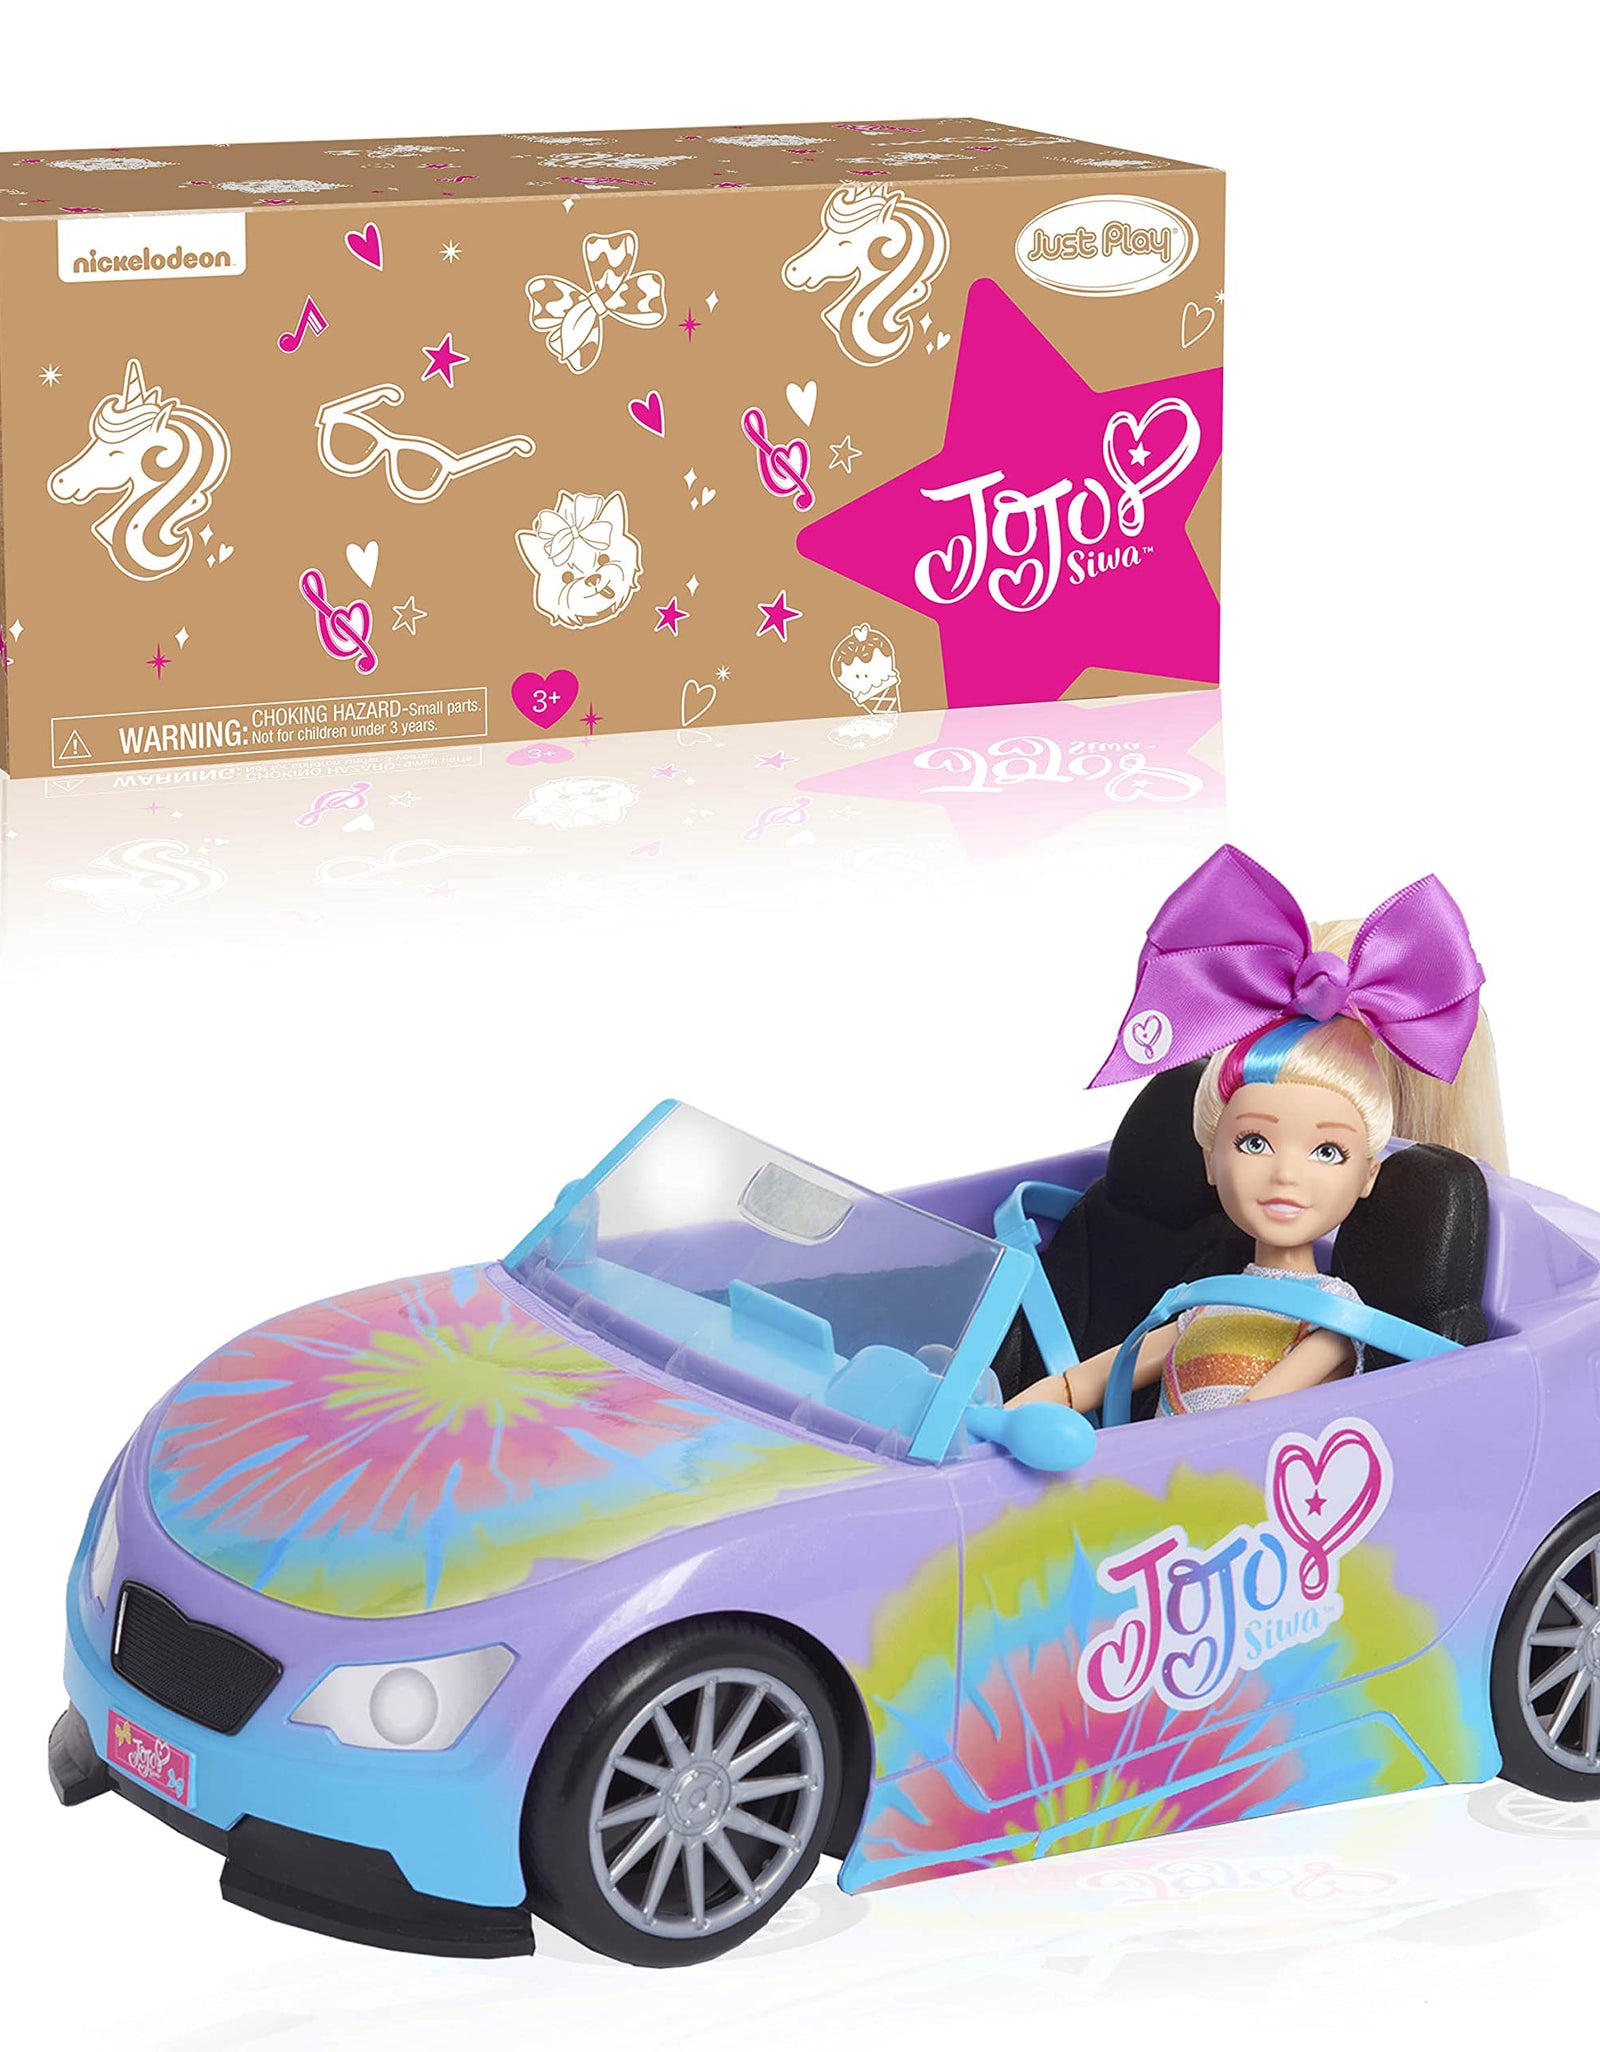 JoJo Siwa California Cruiser, Doll Car, Rainbow Tie-Dye, Fits Two Fashions Dolls, Amazon Exclusive, by Just Play